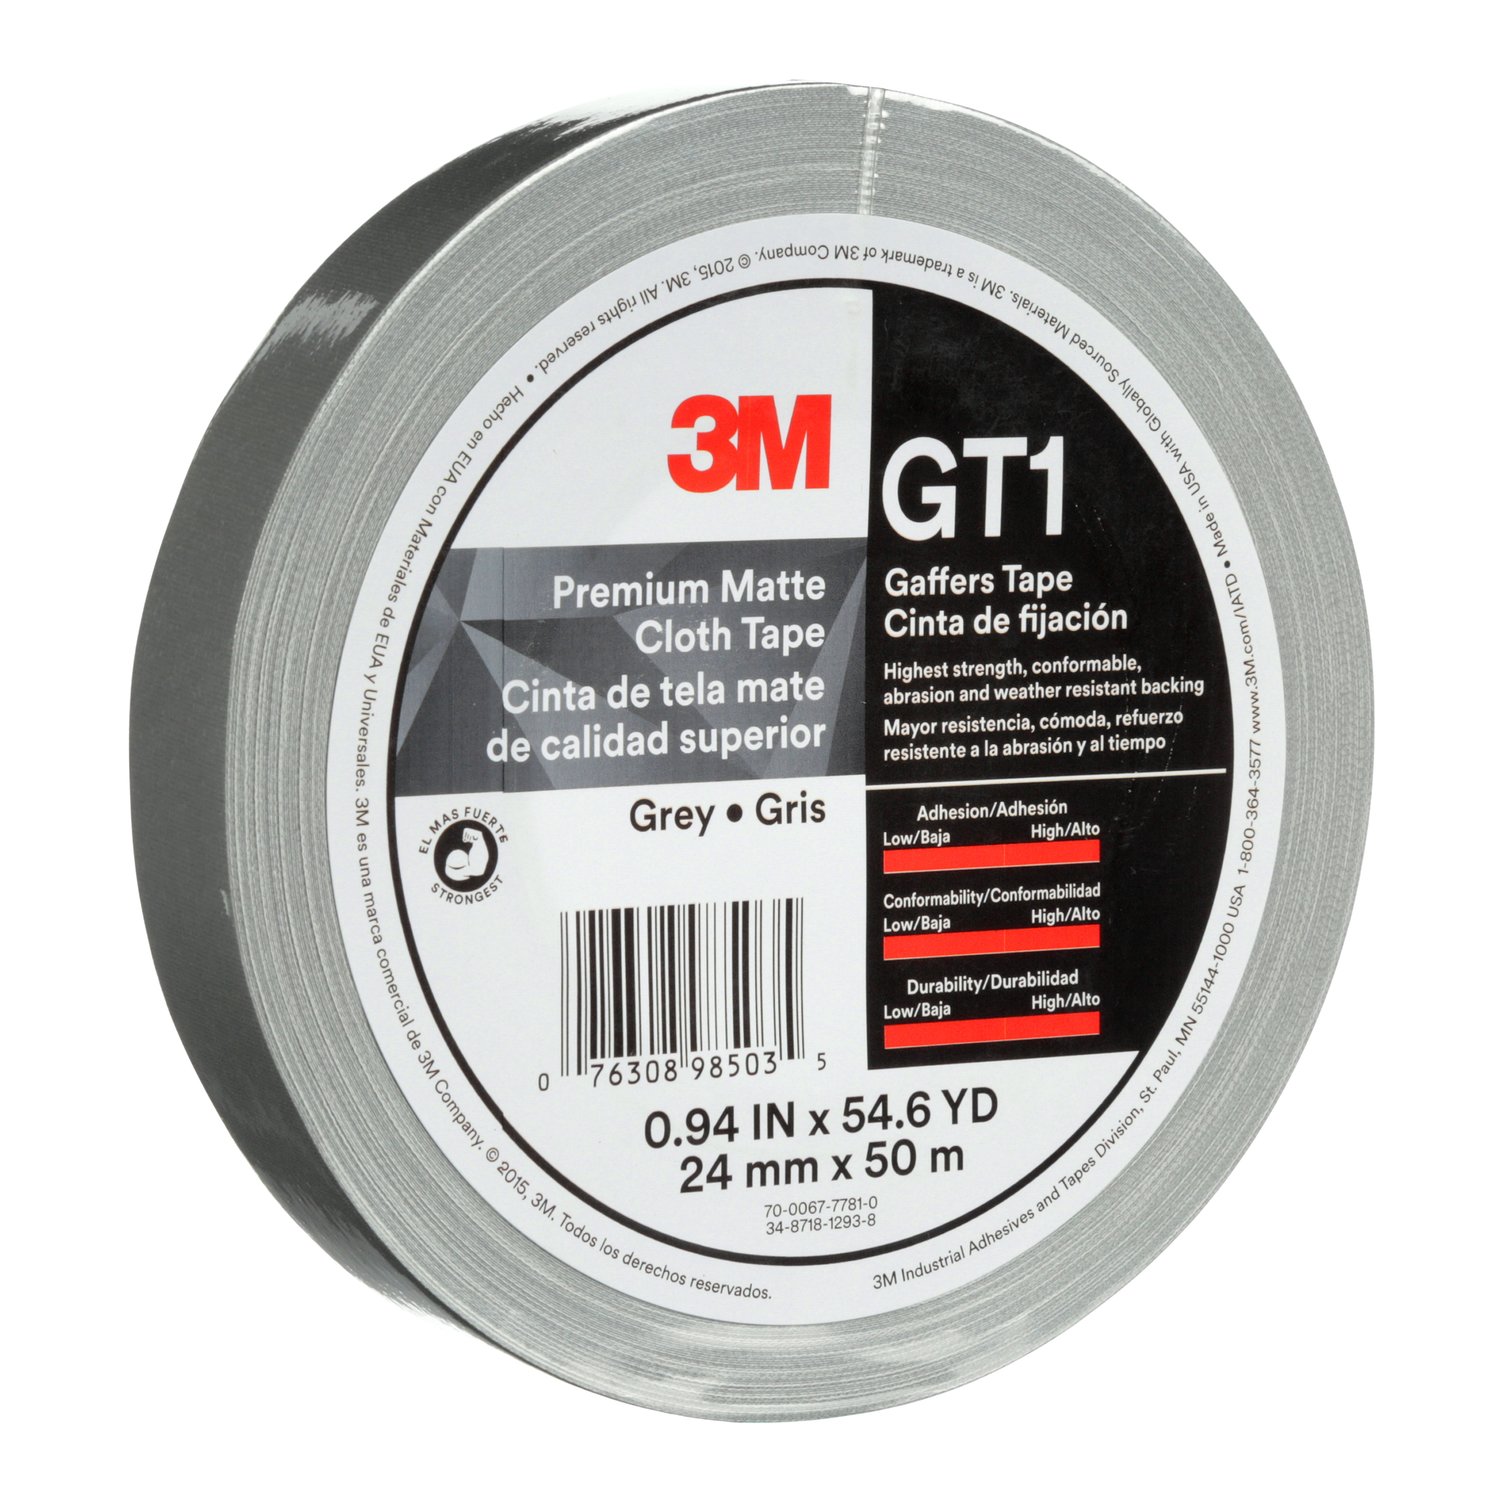 7010376457 - 3M Premium Matte Cloth (Gaffers) Tape GT1, Gray, 24 mm x 50 m, 11 mil,
48/Case